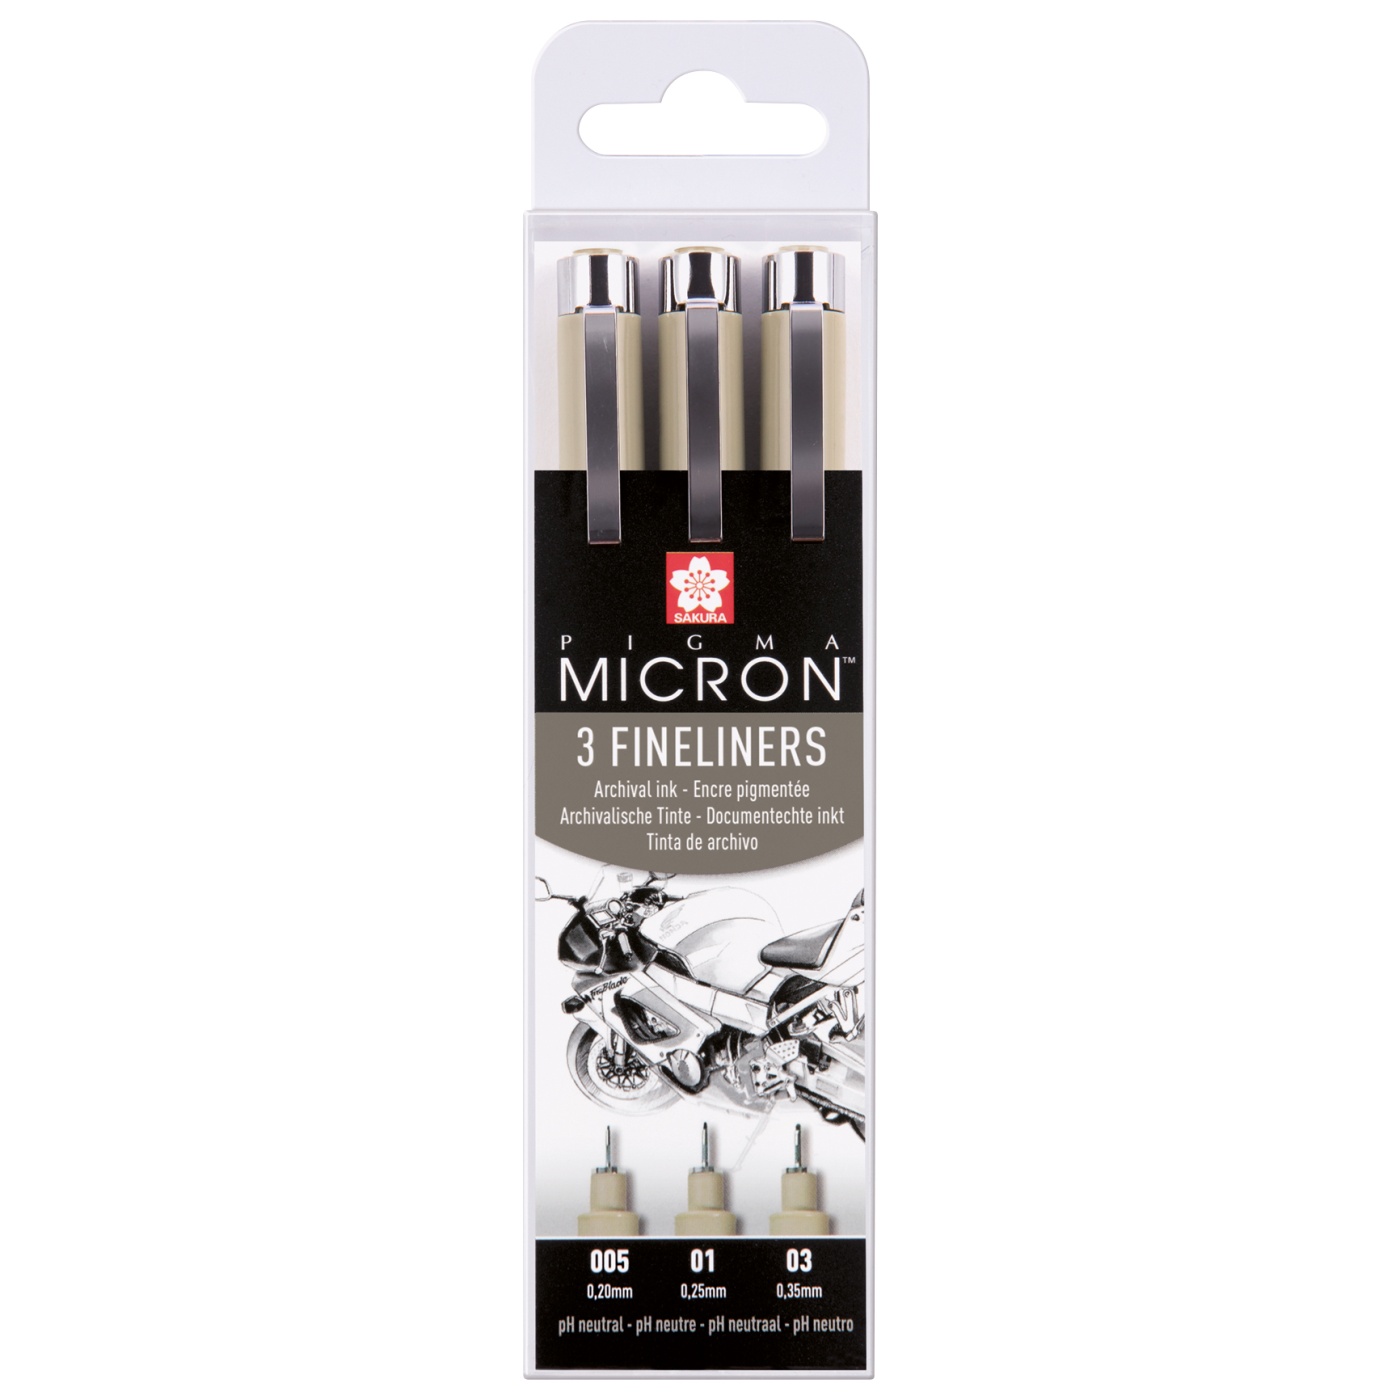 Sakura Pigma Micron Fineliner 6-set + 1 Brush Pen